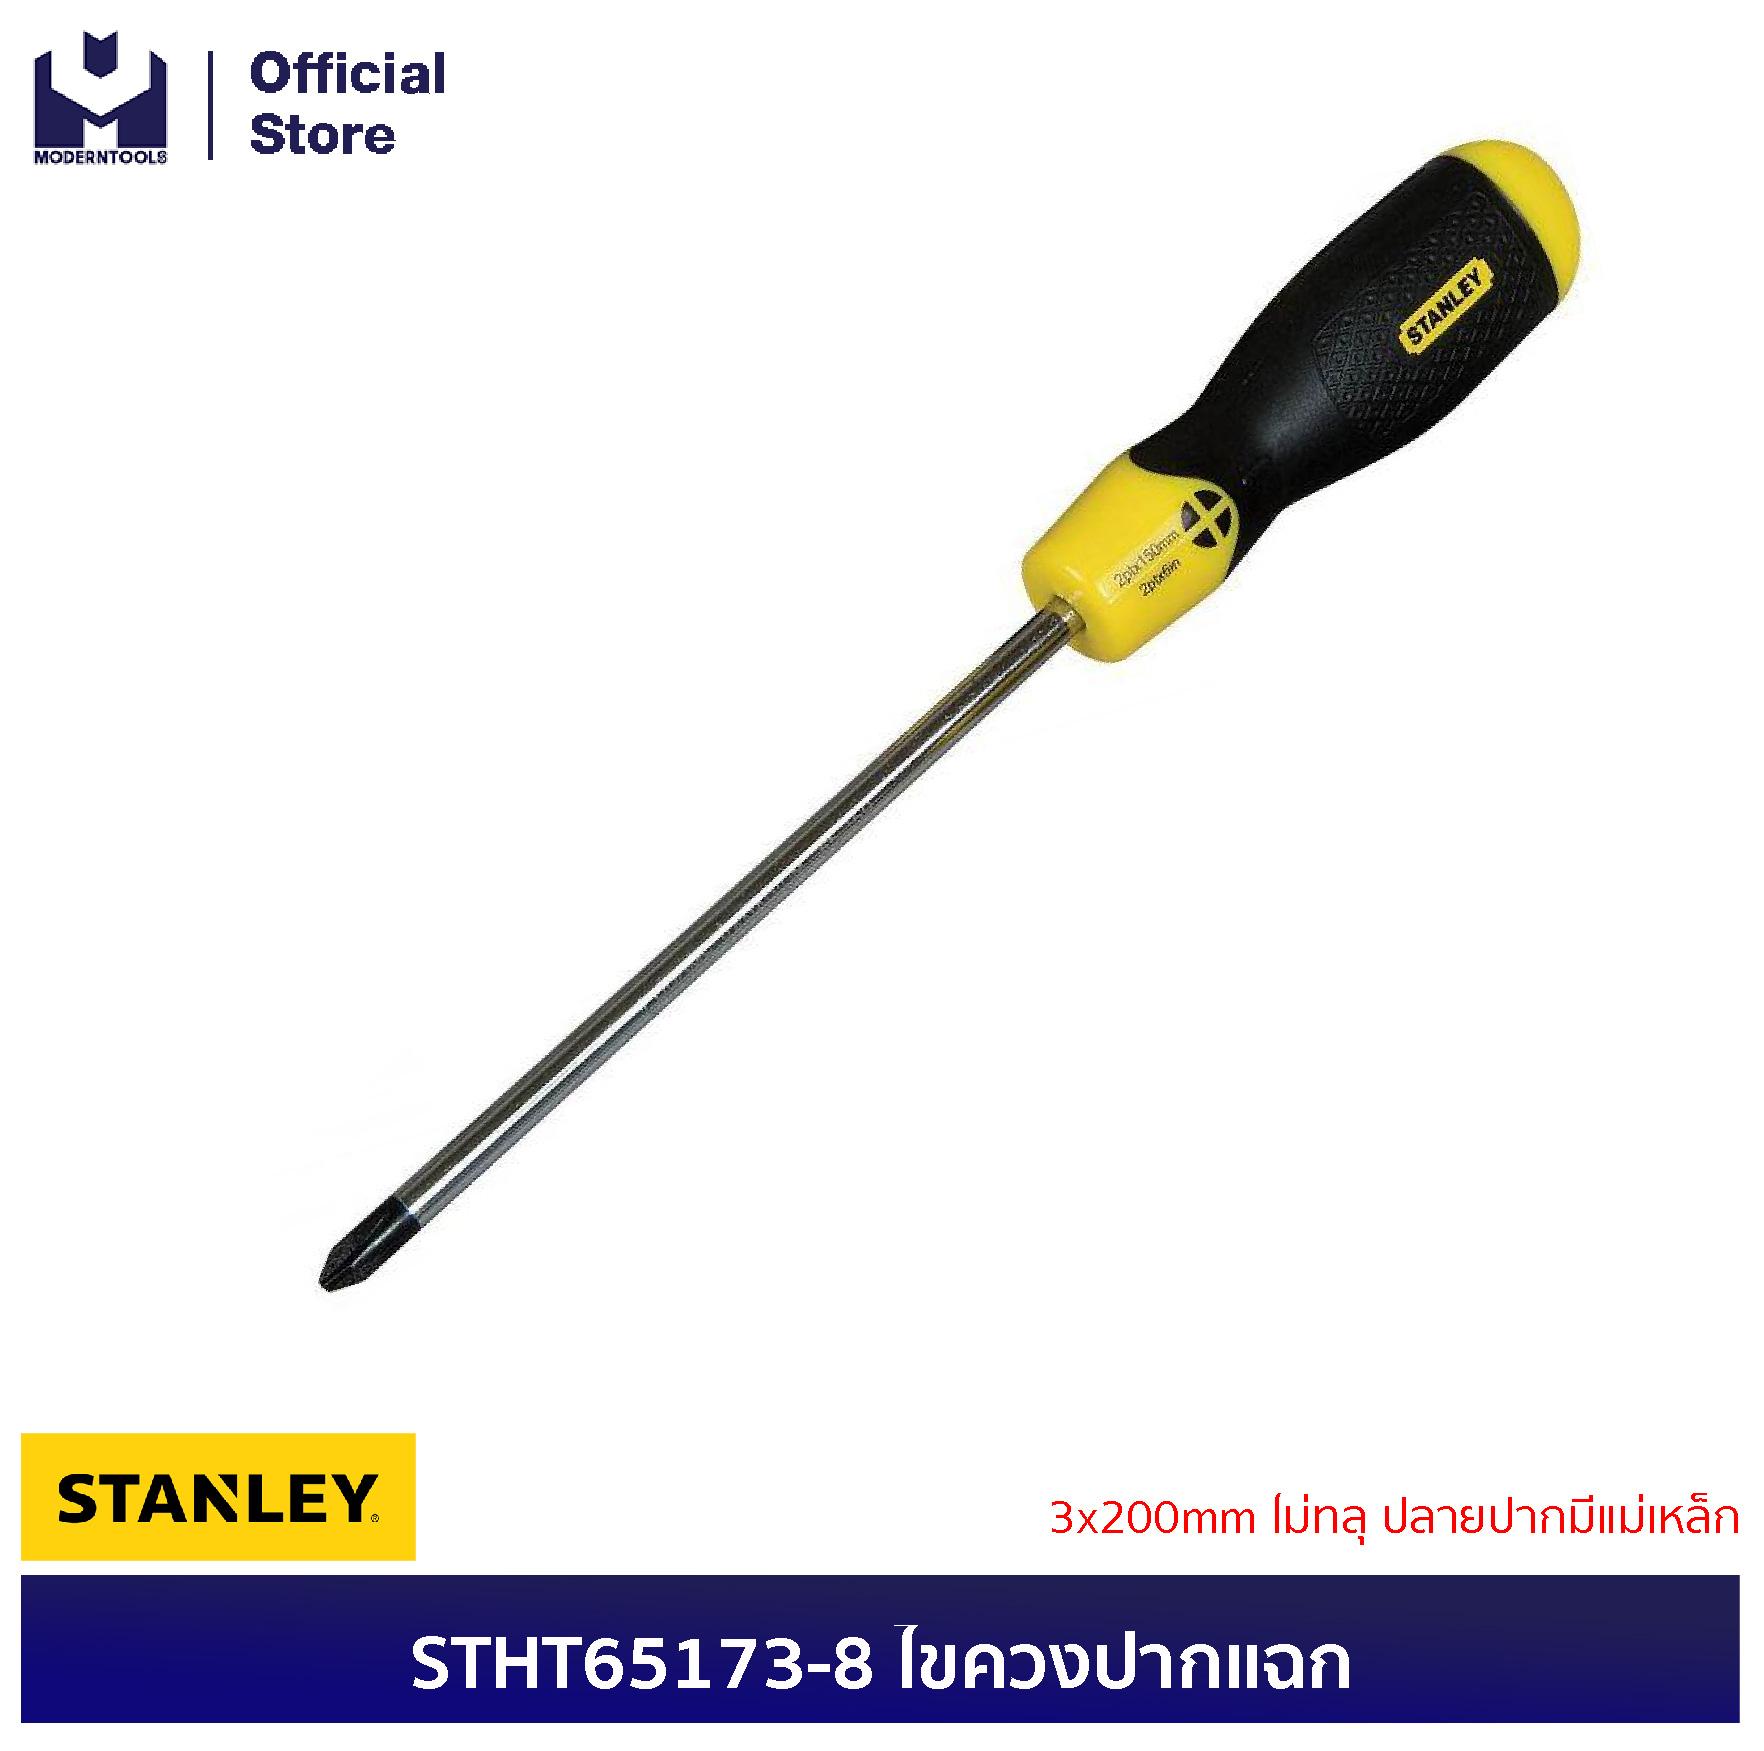 STANLEY STHT65173-8 ไขควงปากแฉก #3x200mm ไม่ทลุ ปลายปากมีแม่เหล็ก (Exthai) | MODERNTOOLS OFFICIAL